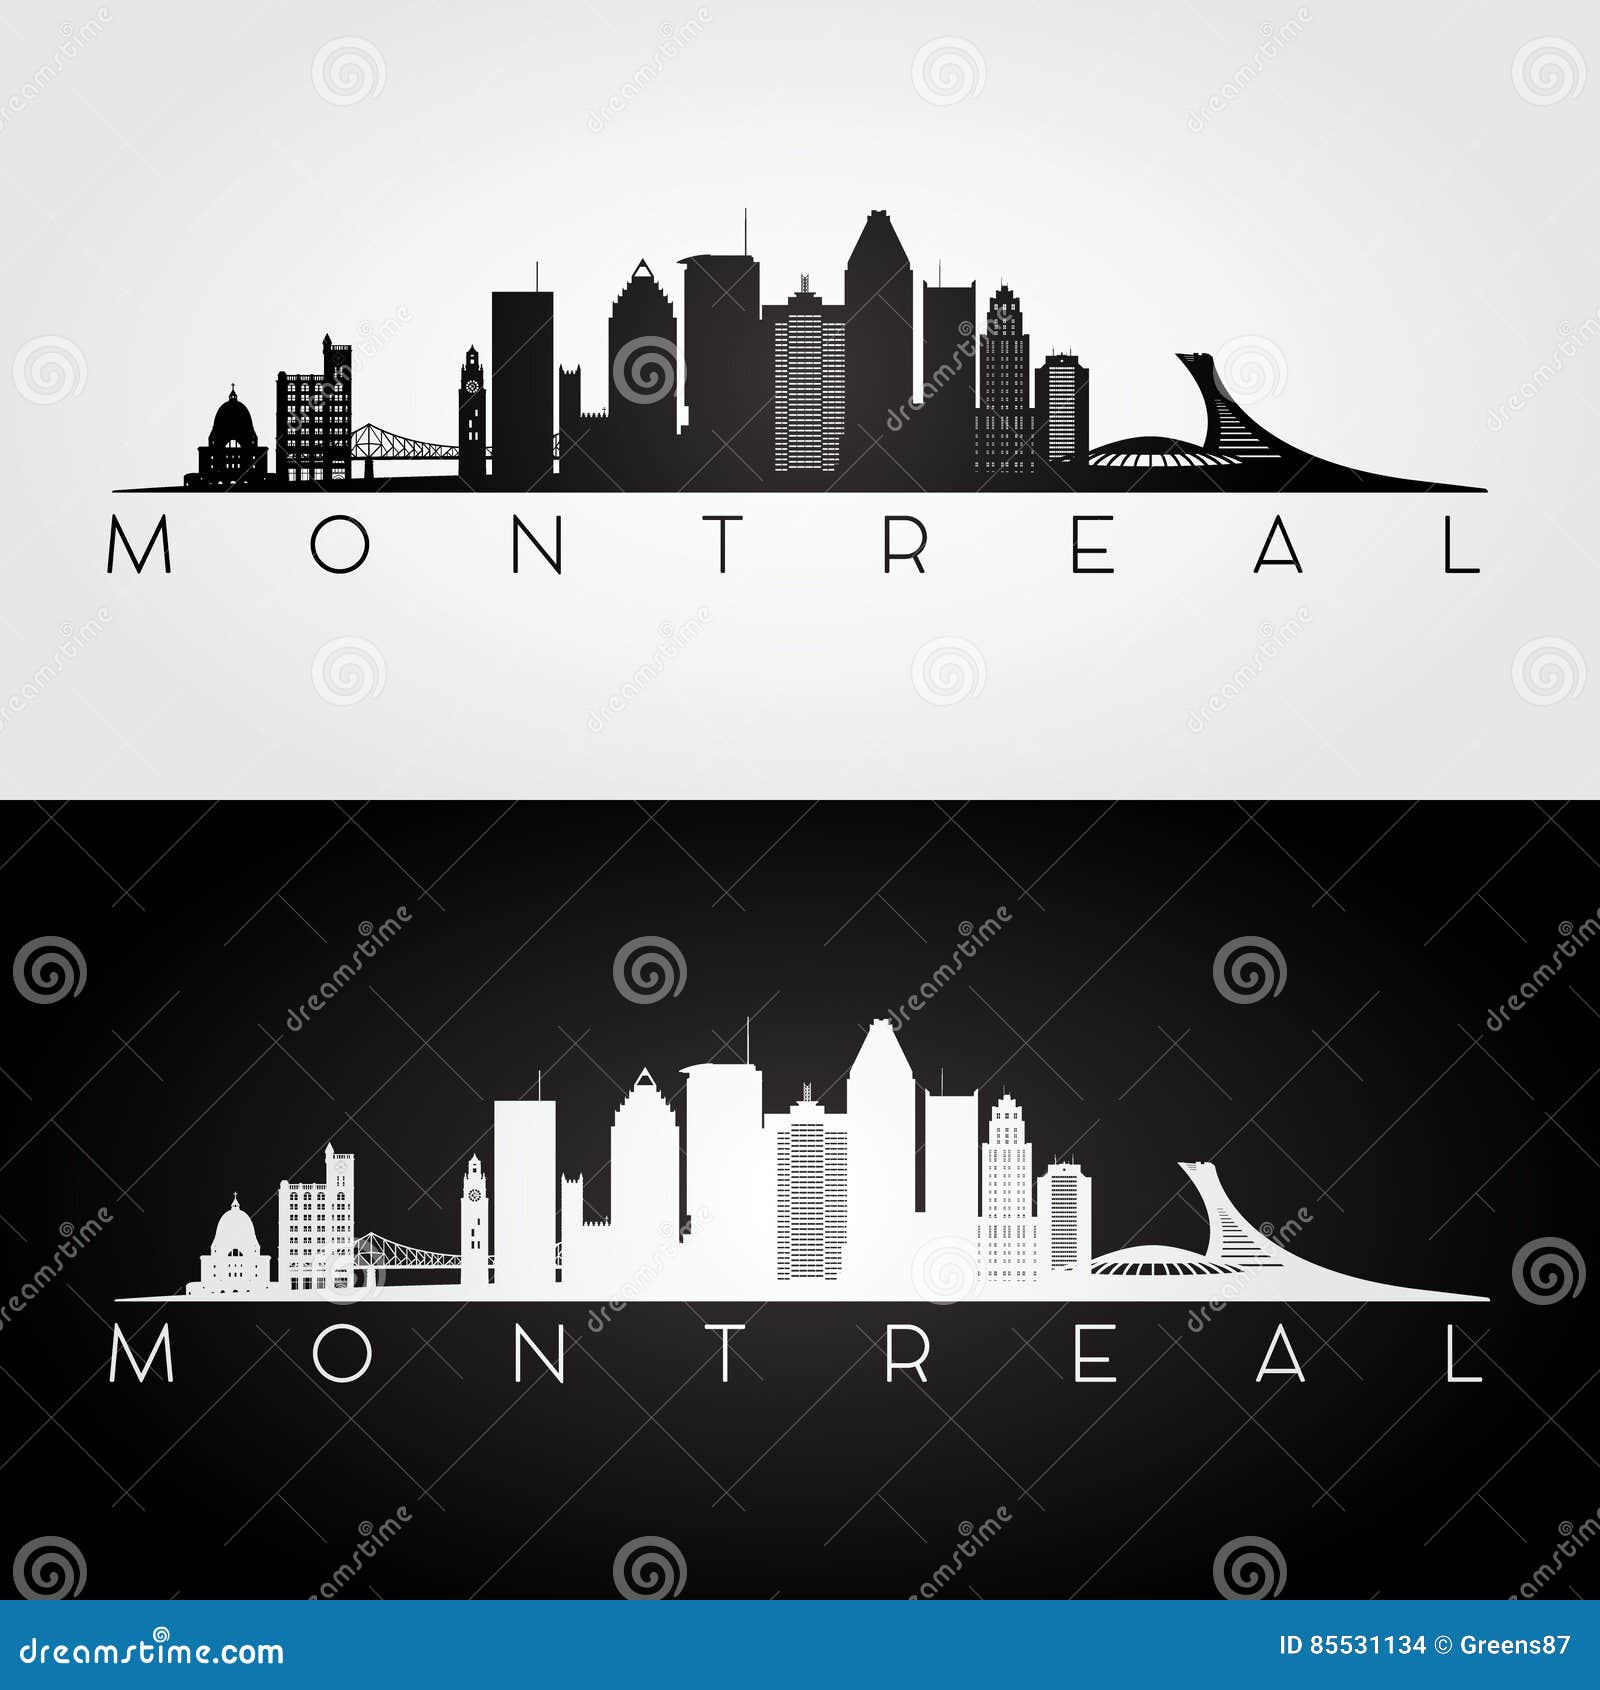 montreal skyline and landmarks silhouette.